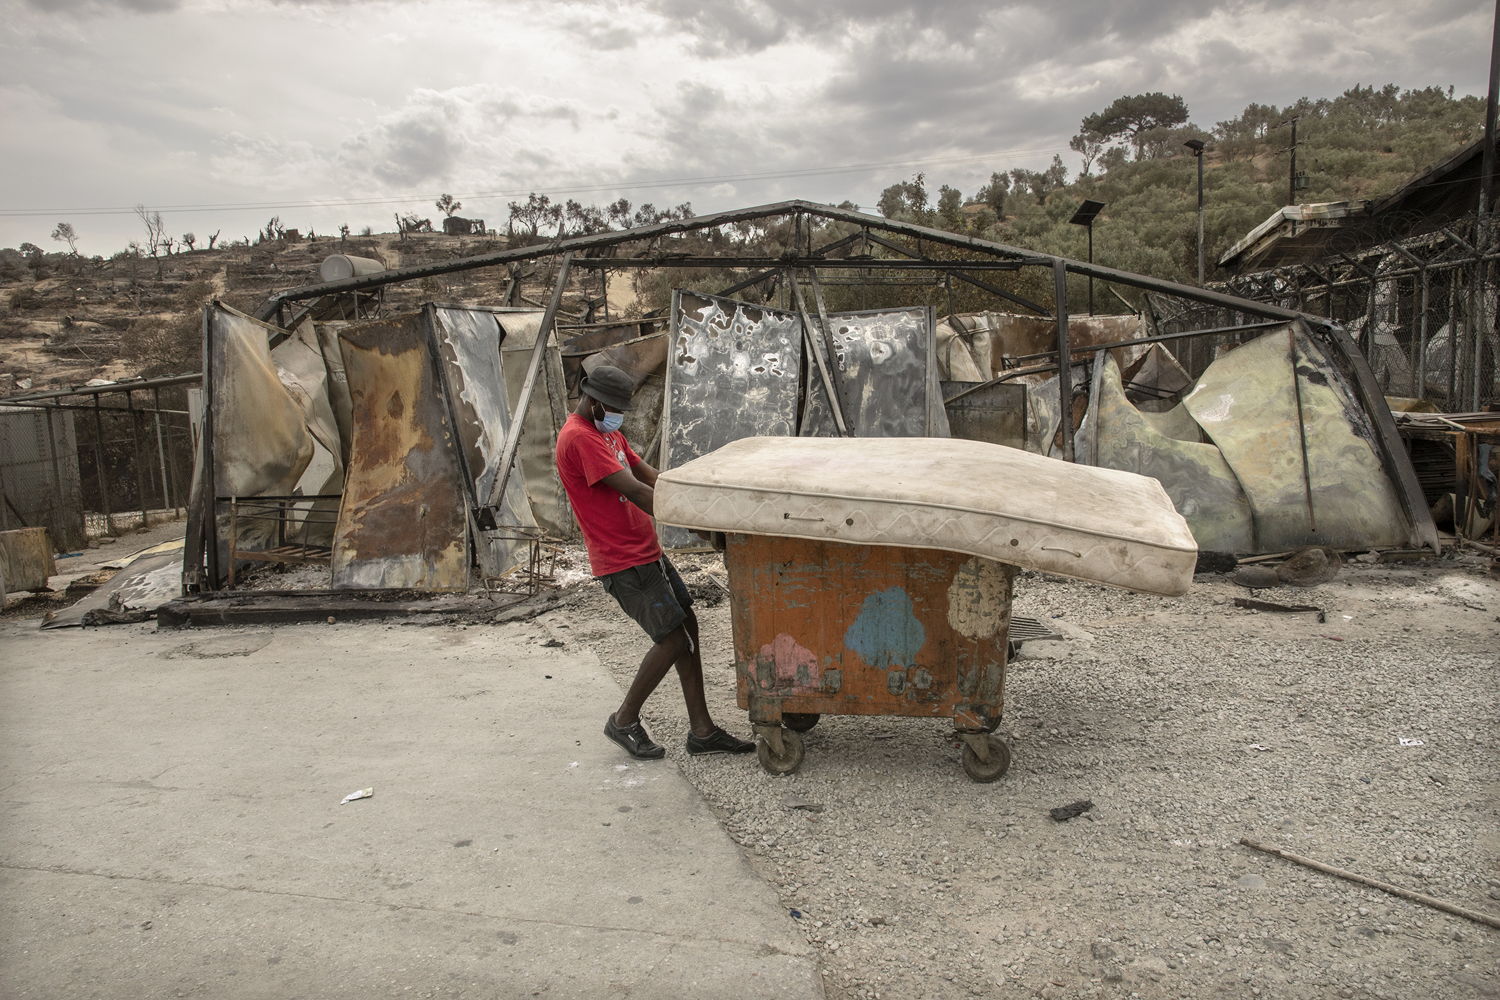 Vluchtelingenkamp van Moria, Lesbos, september 2020, 37 x 55 cm © Mathieu Pernot